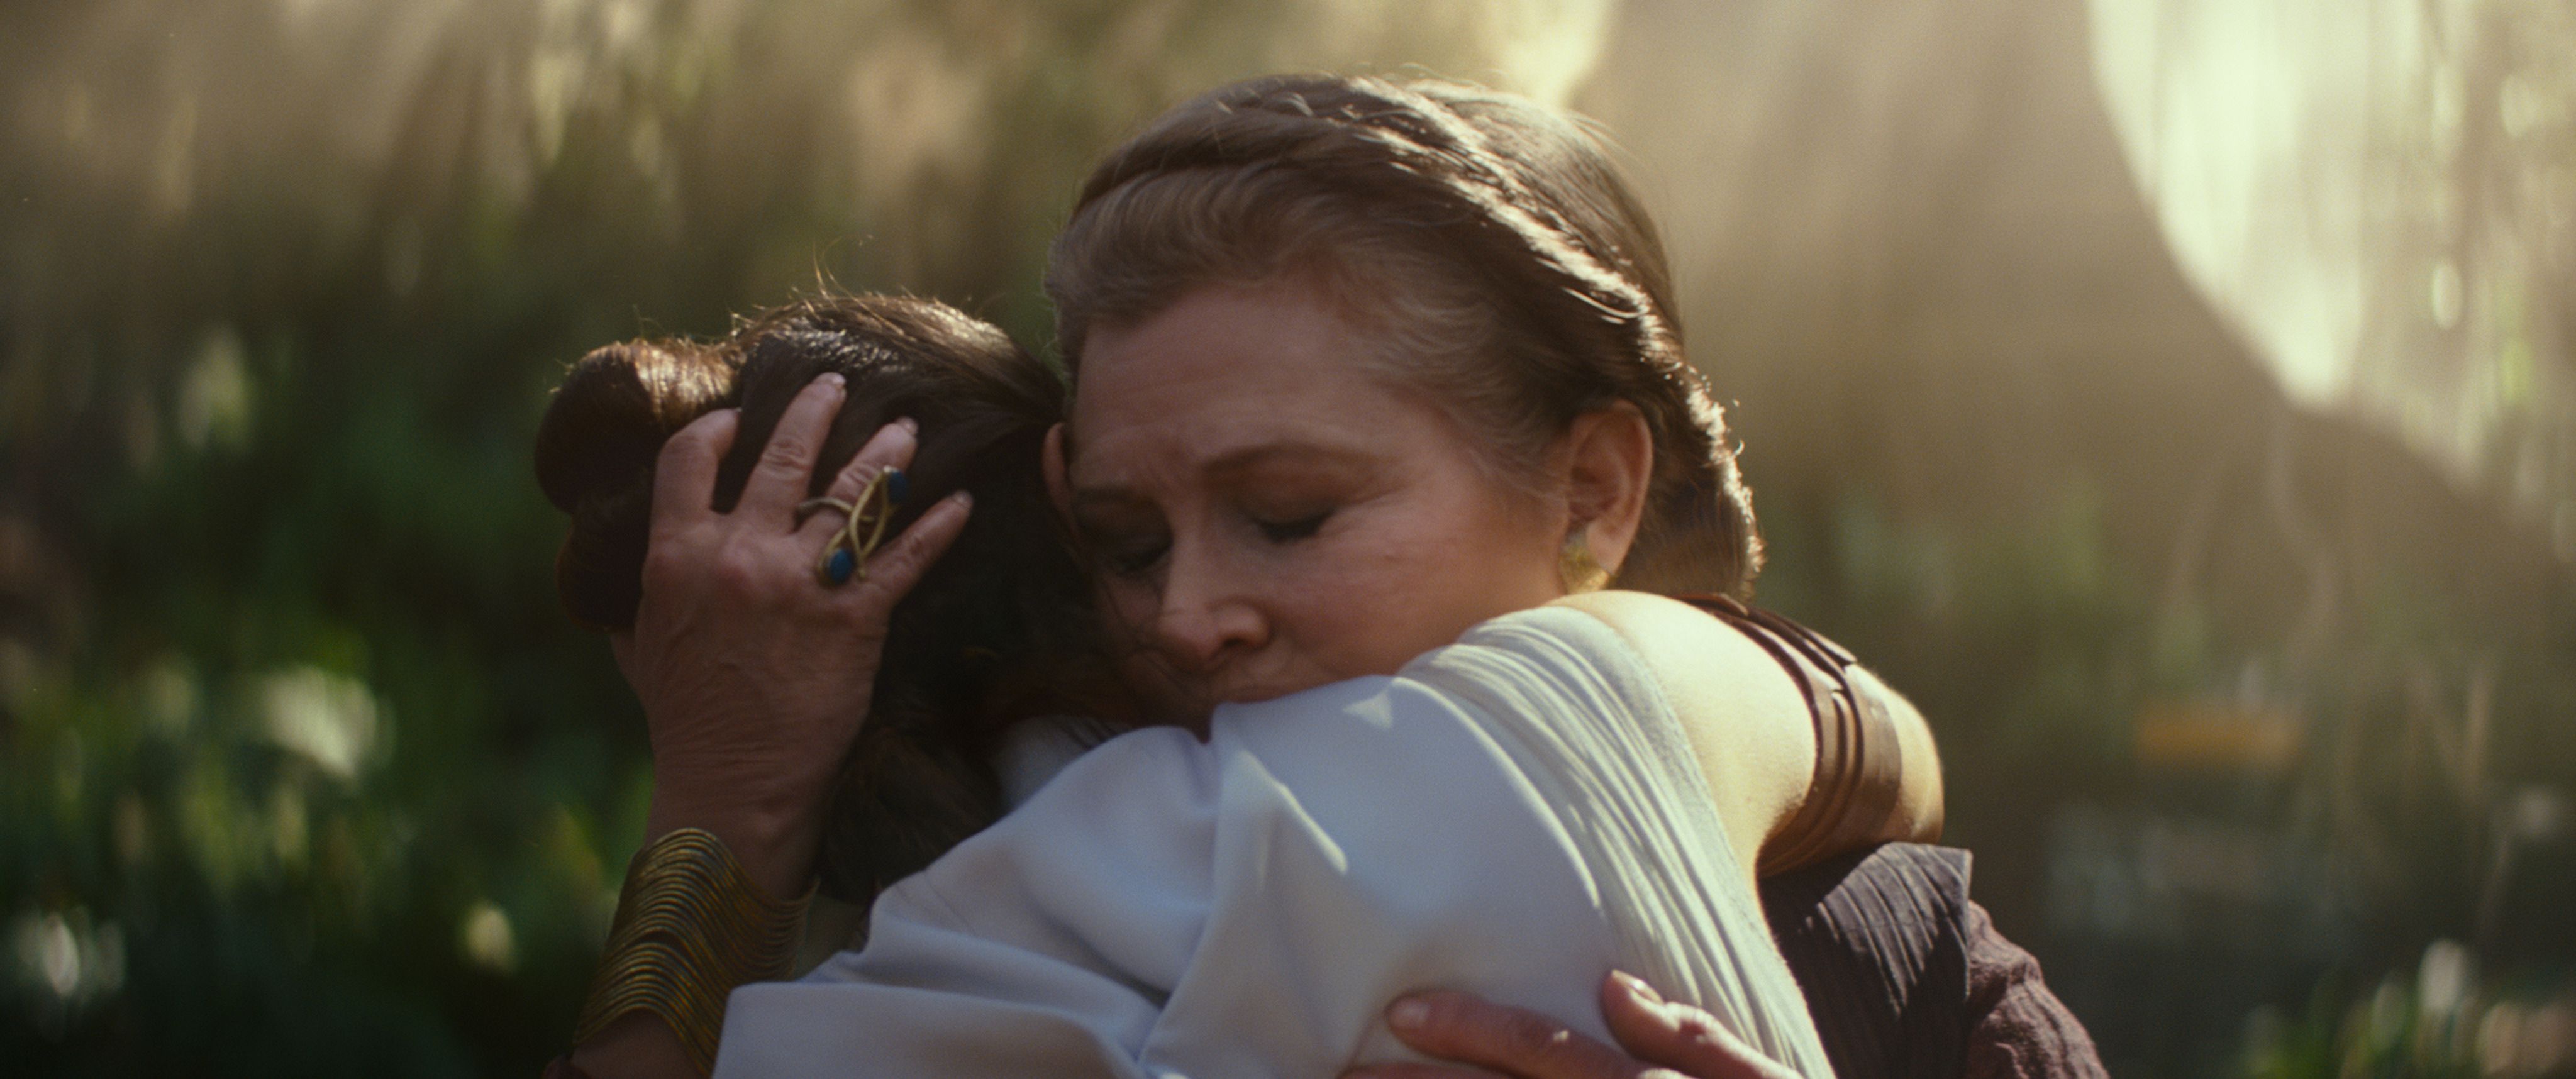 Star Wars The Rise of Skywalker trailer image #5